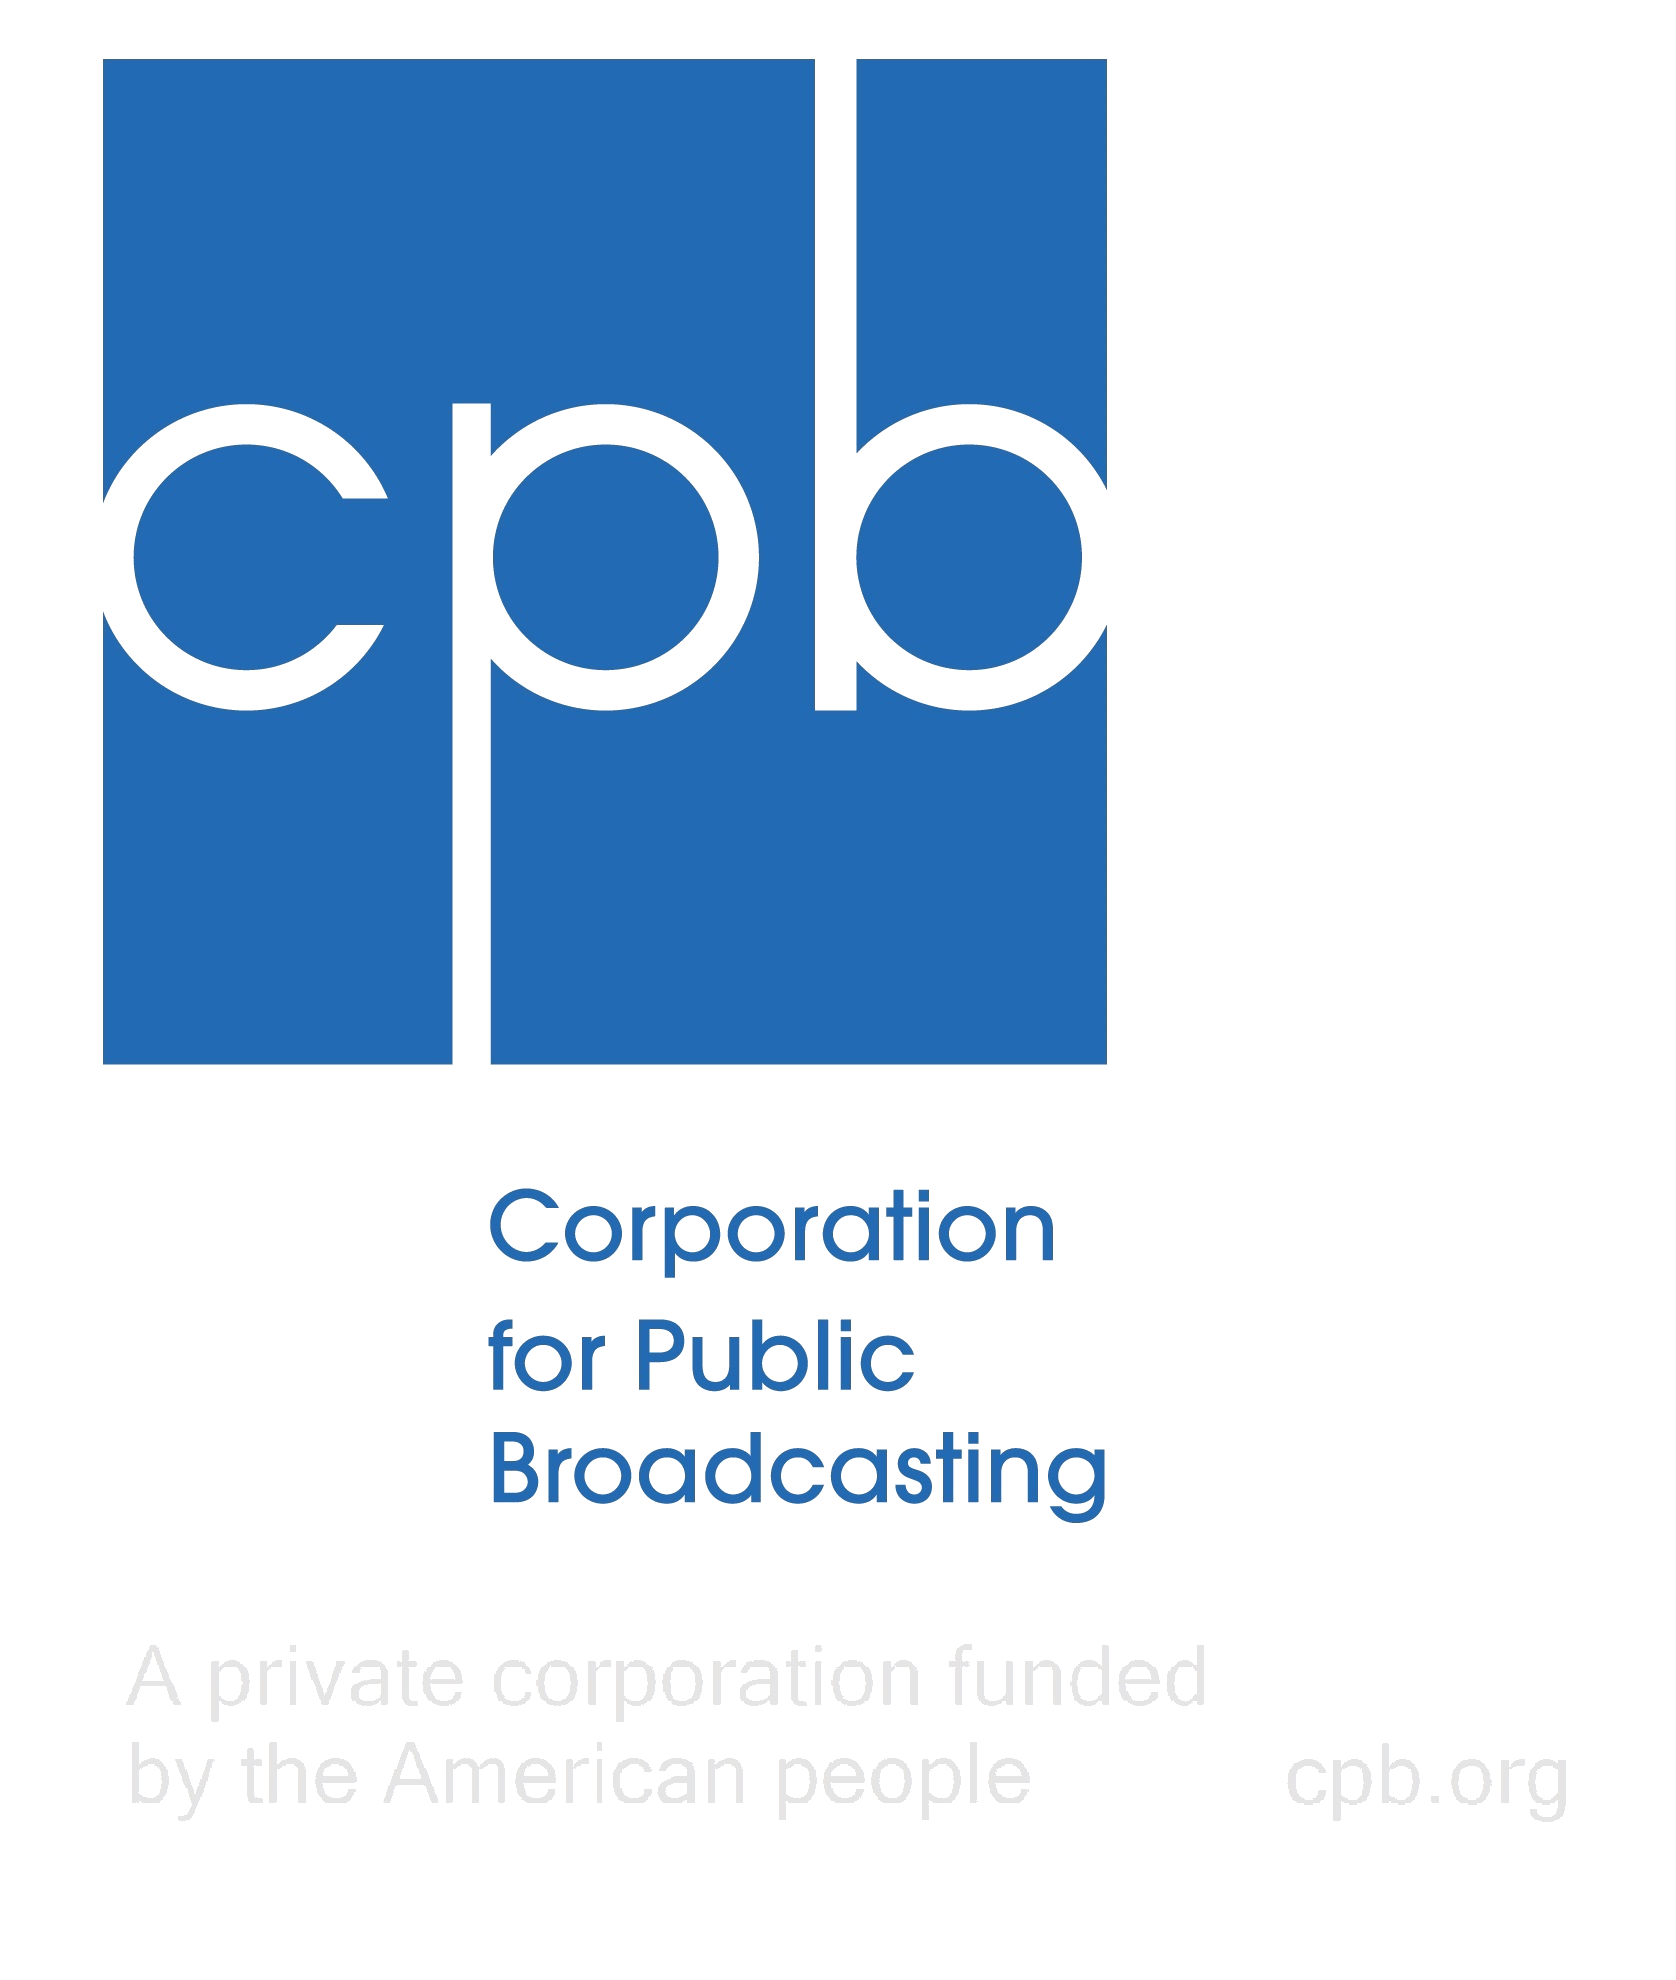 CPB Logo - Image - CPB 2002 Logo.png | Logopedia | FANDOM powered by Wikia